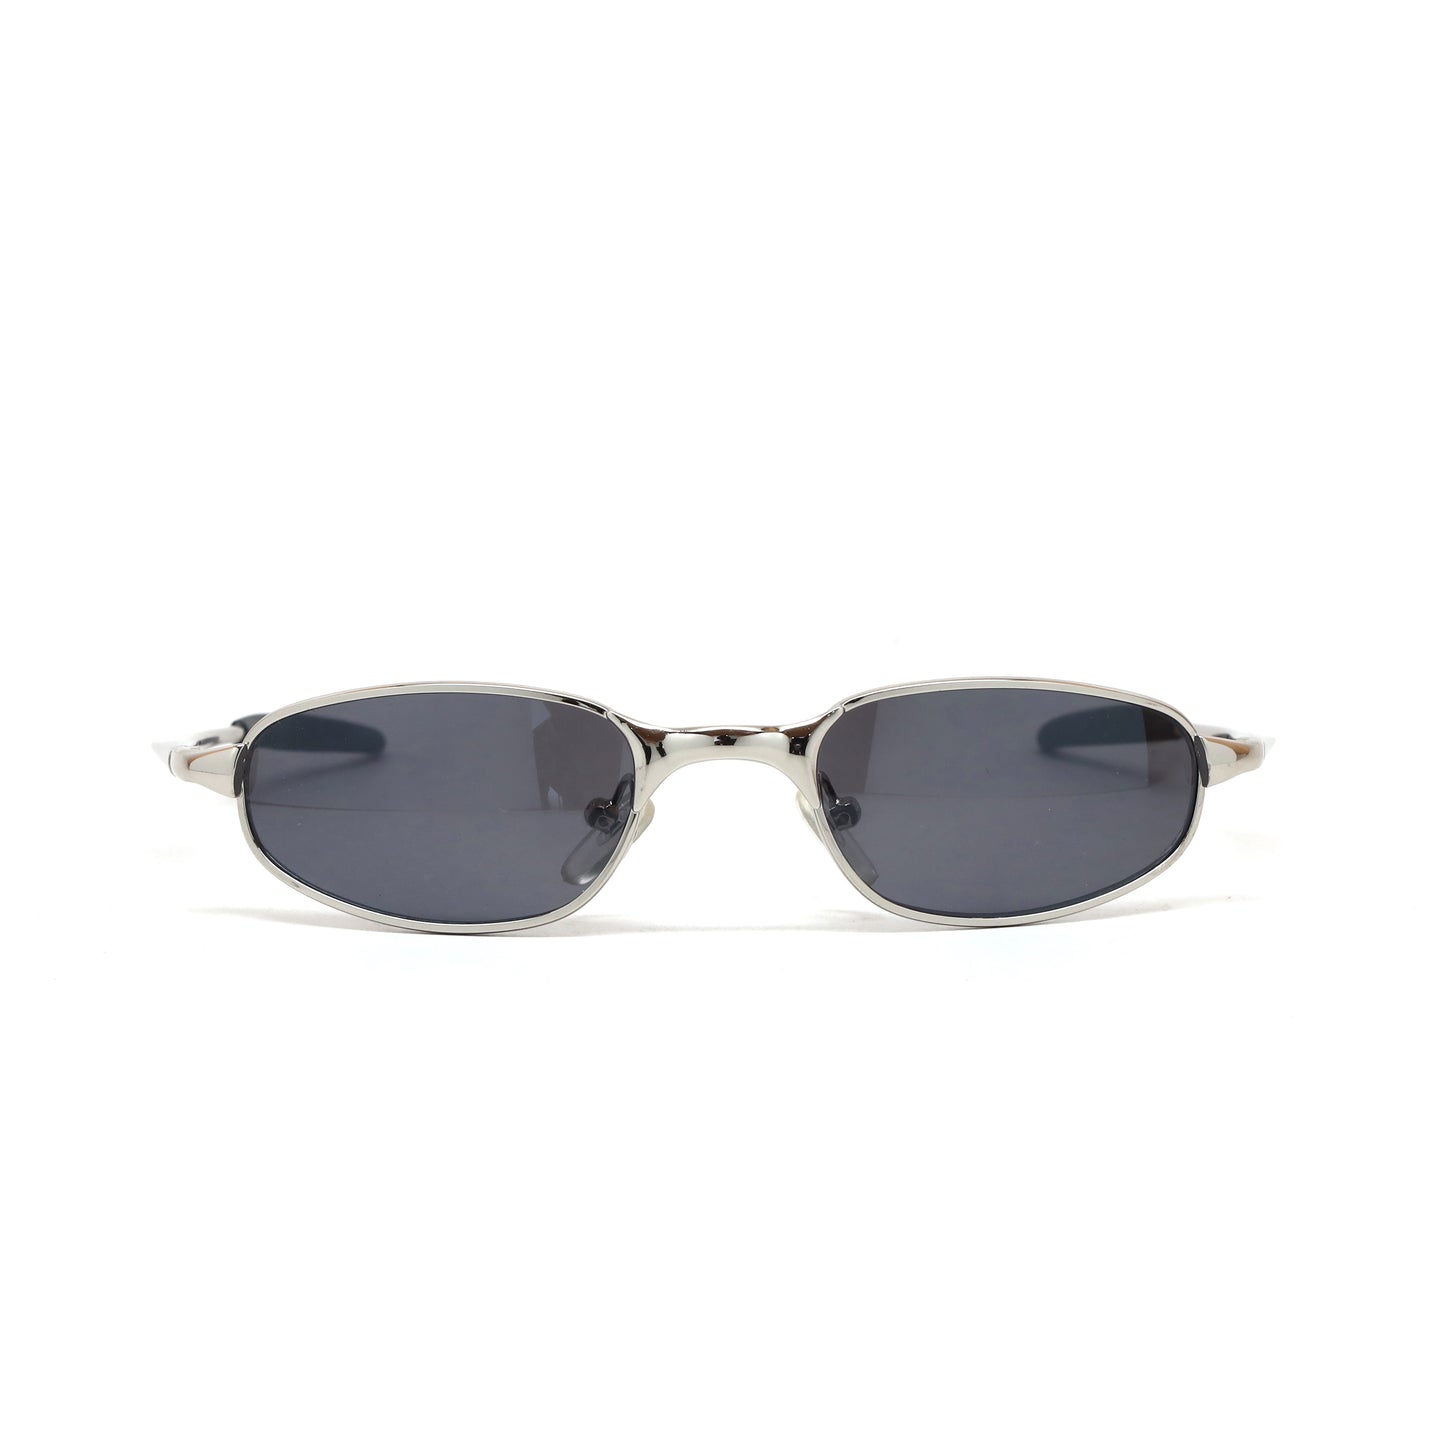 //Rare// True Vintage Small Size 90s Matrix Style Sunglasses - Chrome